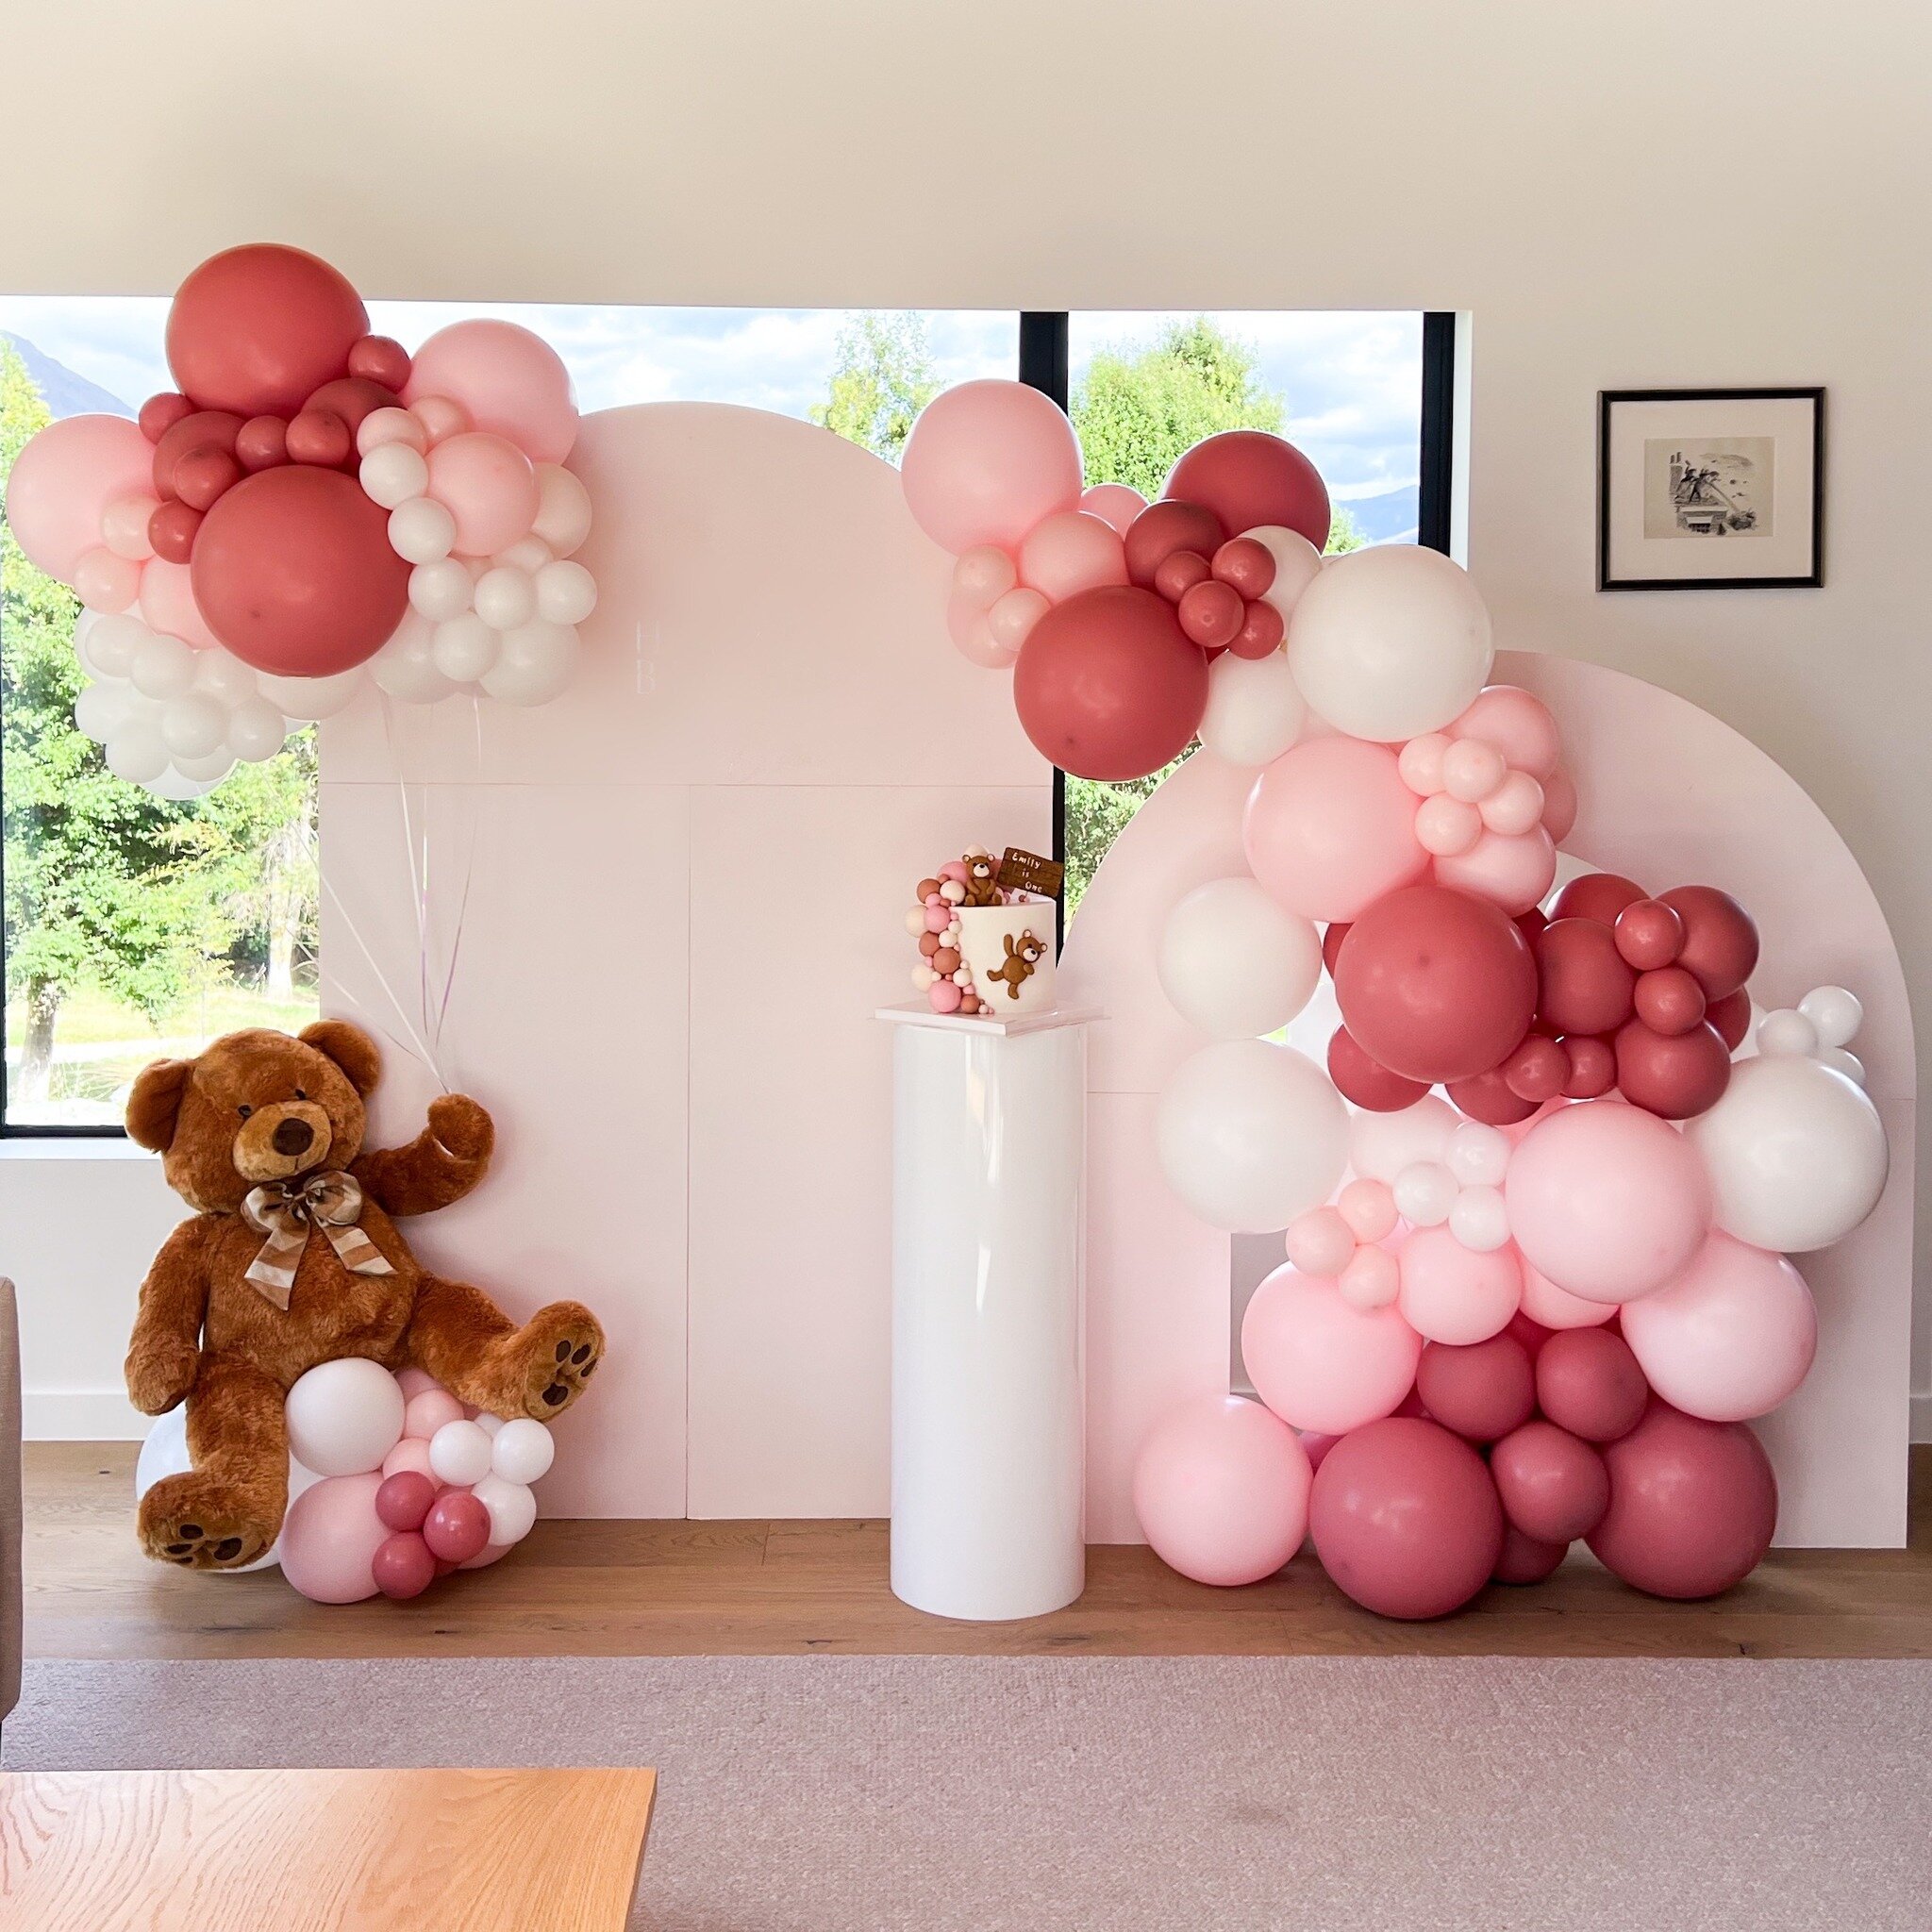 Emily's first birthday was a teddy bear dream come true, with all shades of pink making it extra sweet!

 #queenstownnz #queenstown #wanakanz #wanaka #newzealand #wānaka #newzealandguide  #balloon #balloonarch #balloondecor #balloonartist #balloonsty